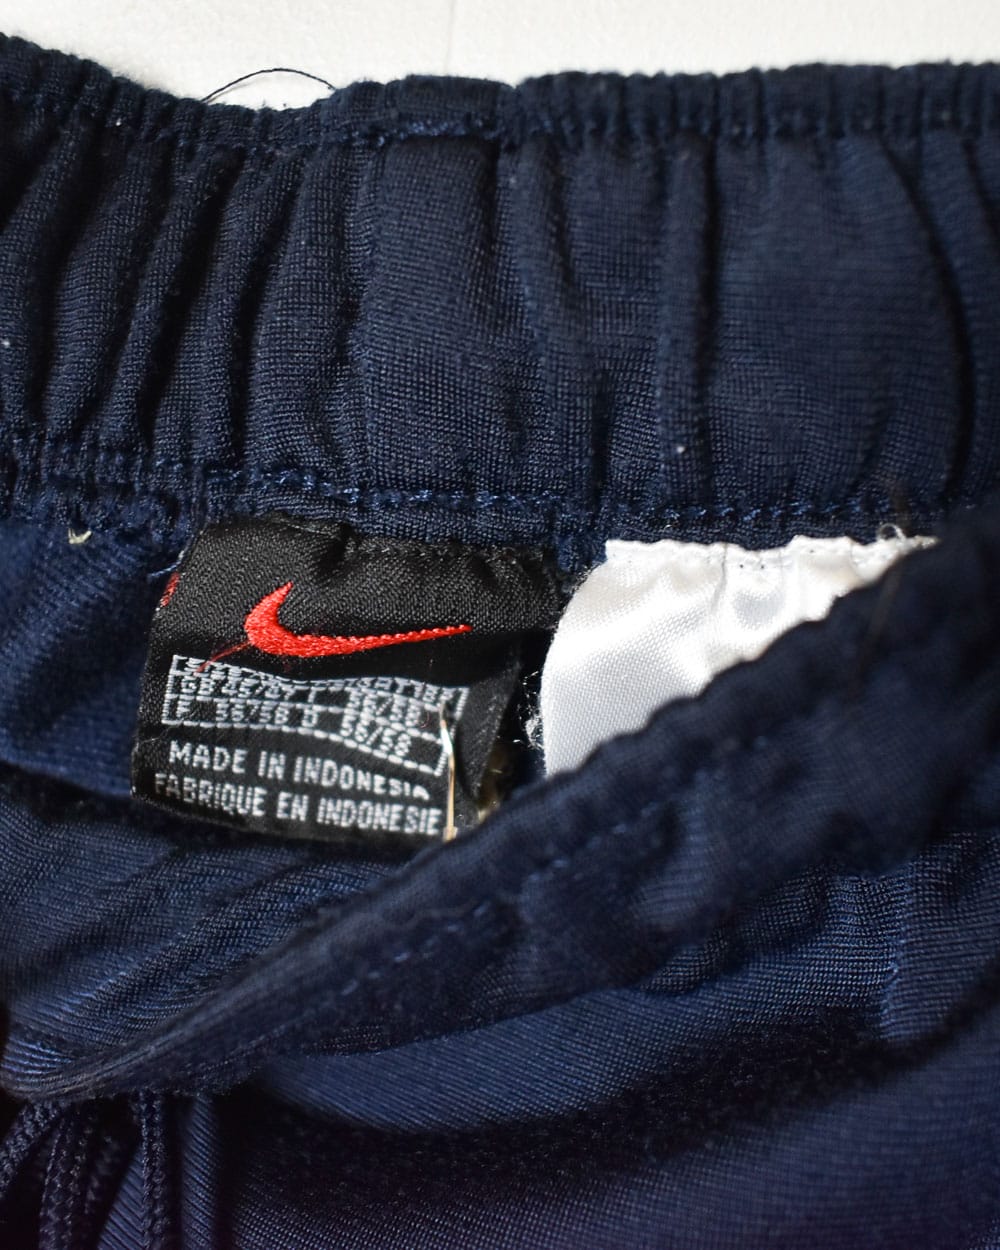 Navy Nike Tracksuit Bottoms - Large